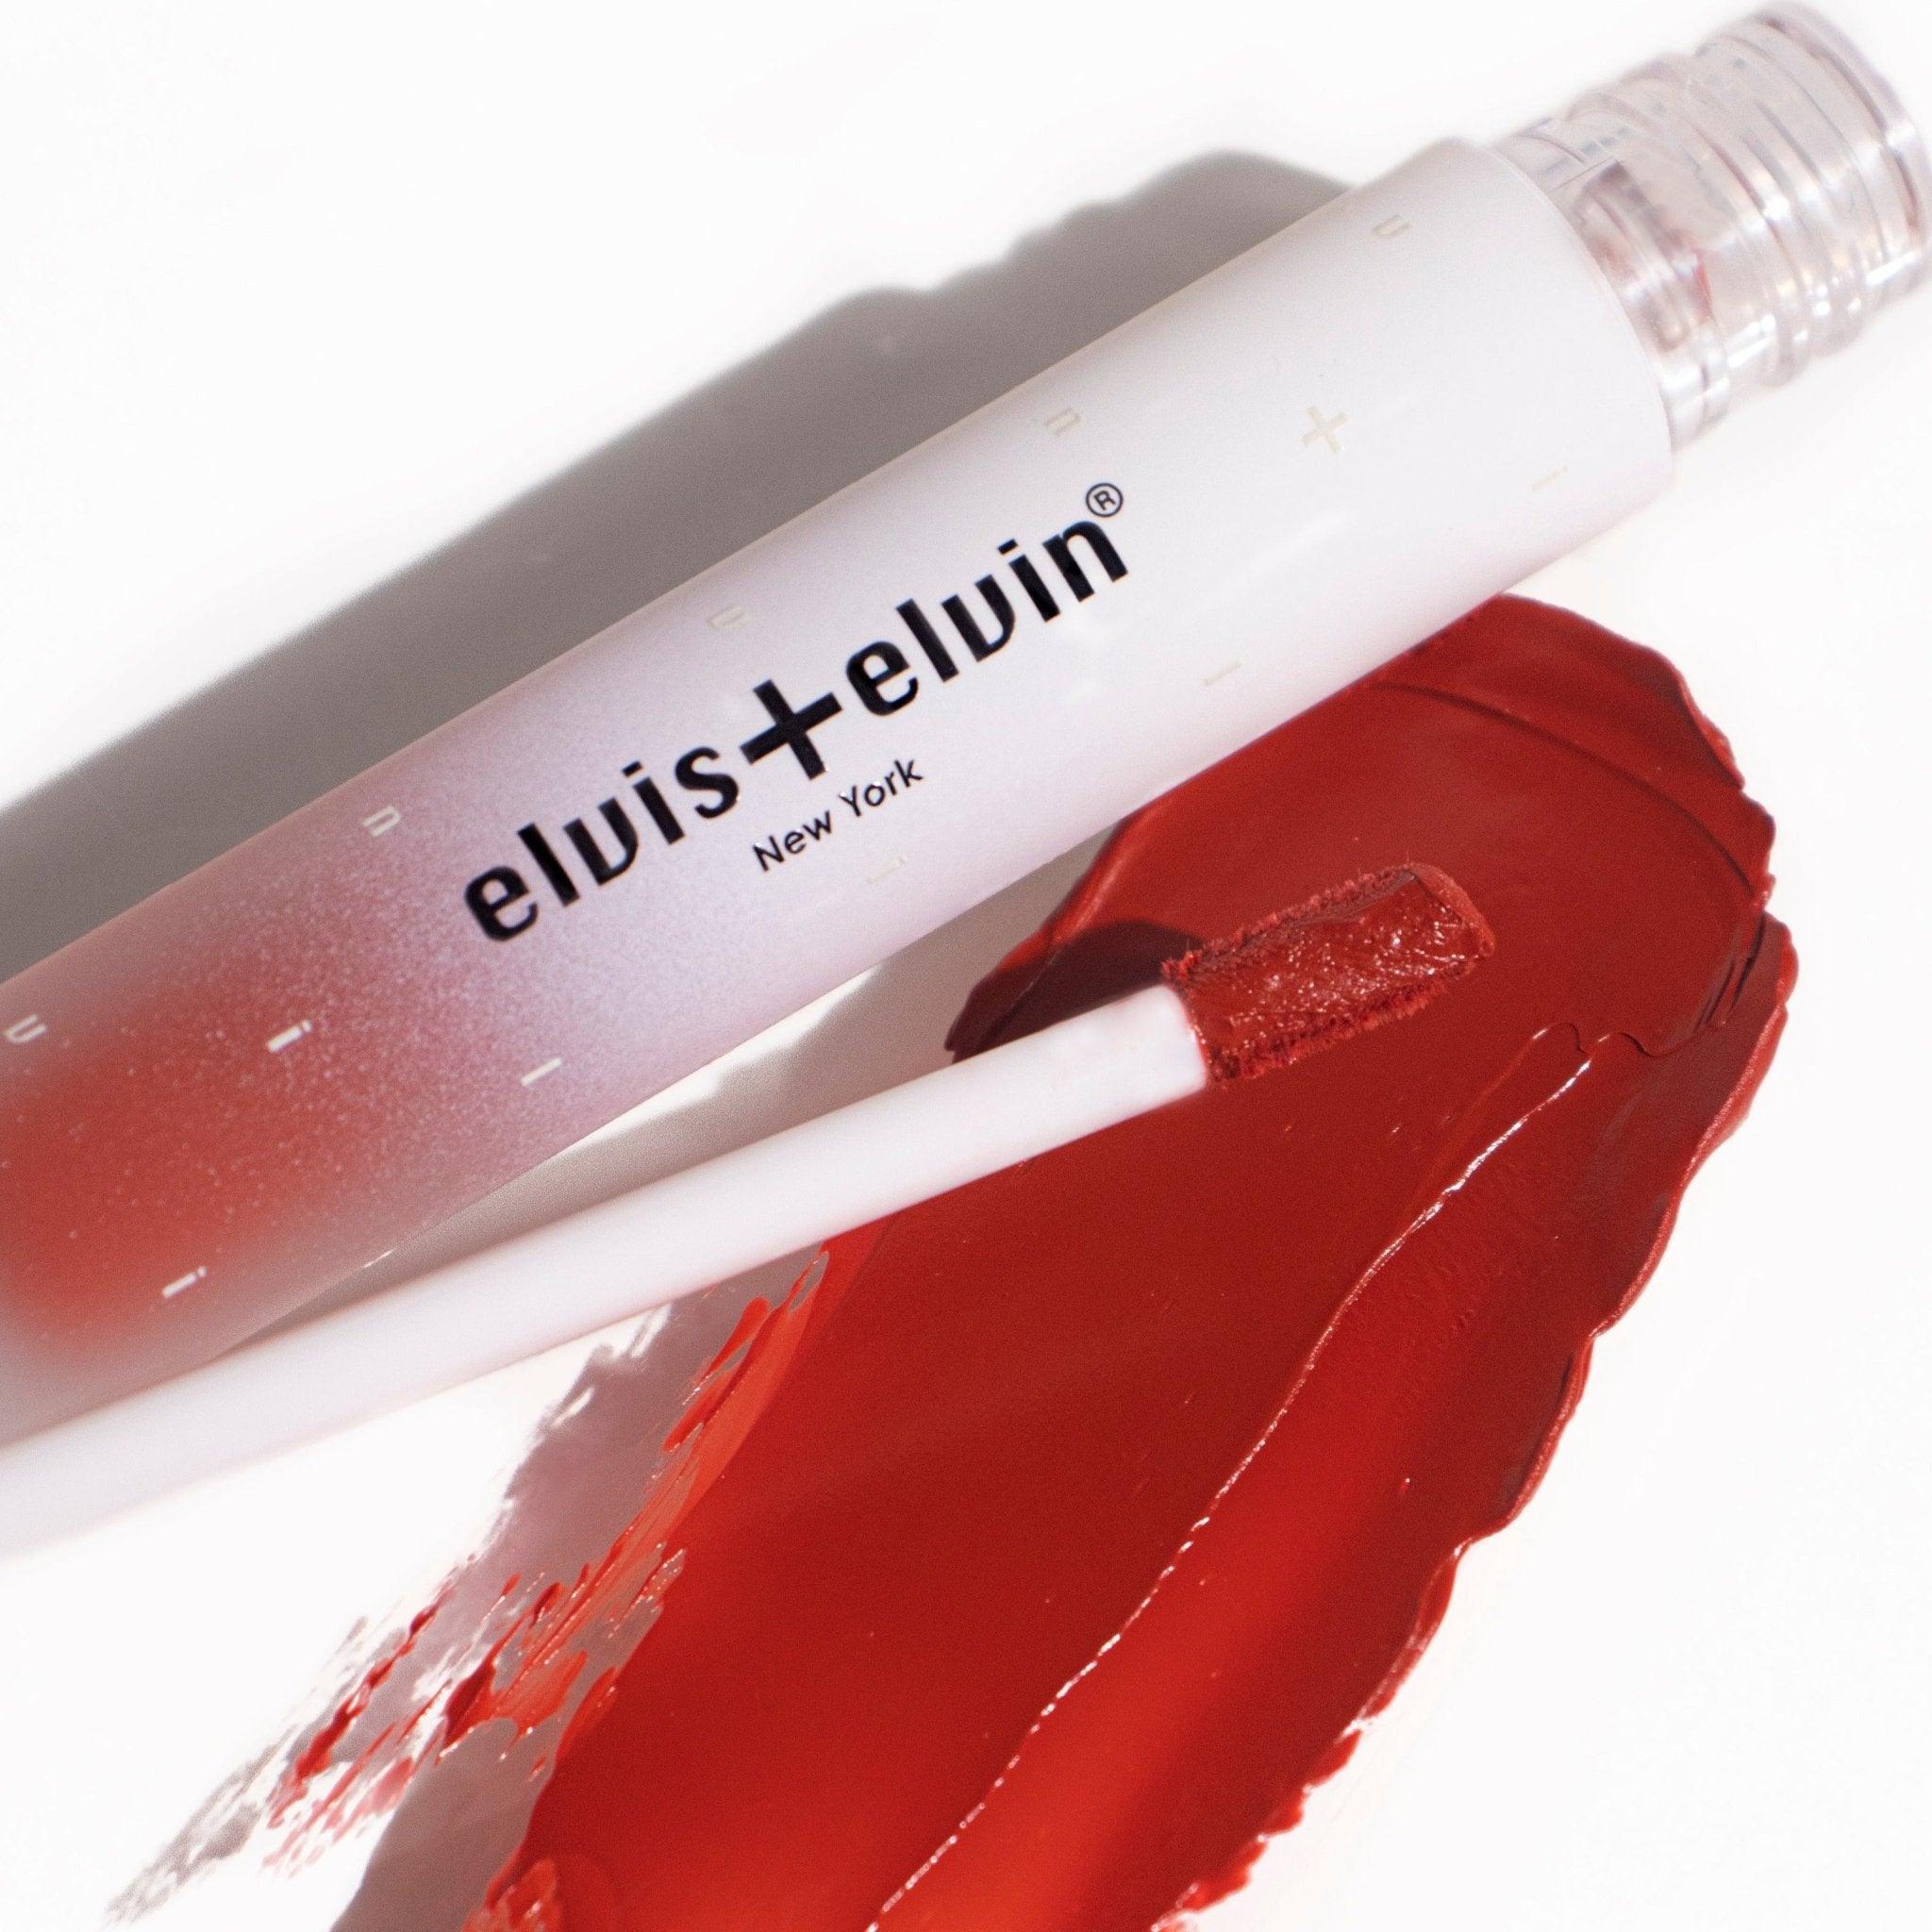 elvis+elvin Floral Liquid Lipstick with Hyaluronic Acid 